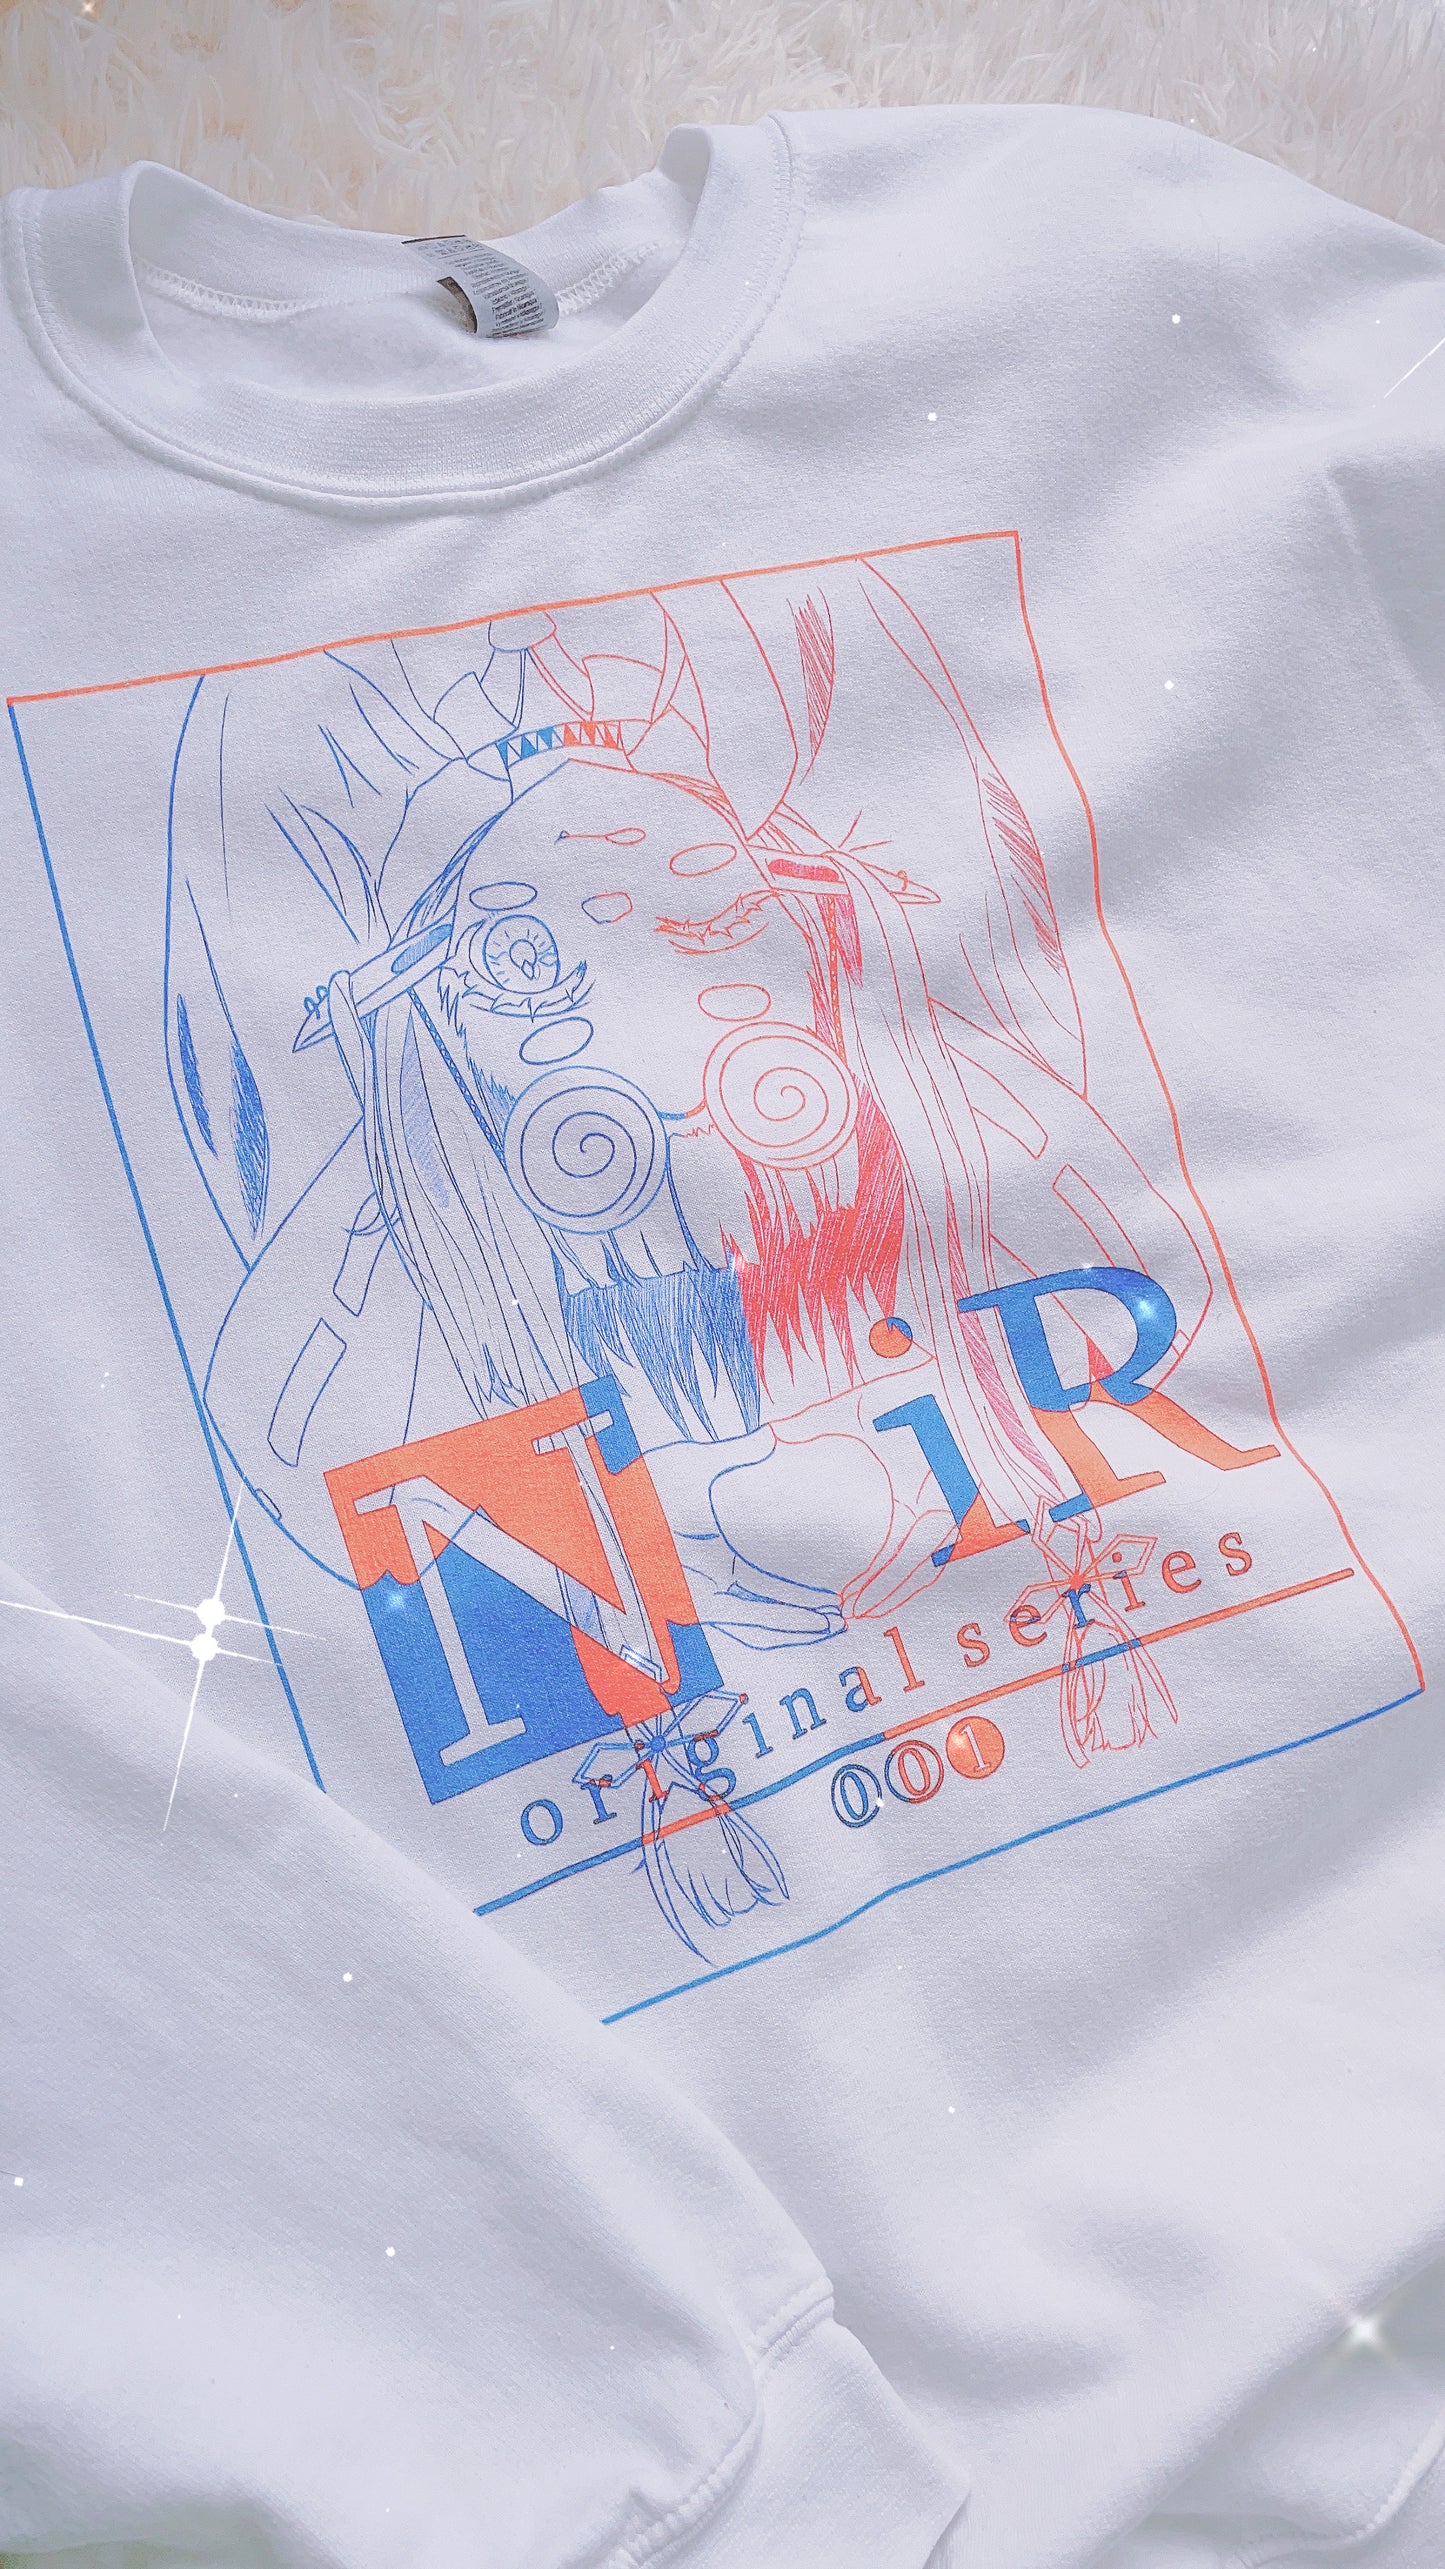 NoiR Original Series 001 "Nia" Sweatshirt